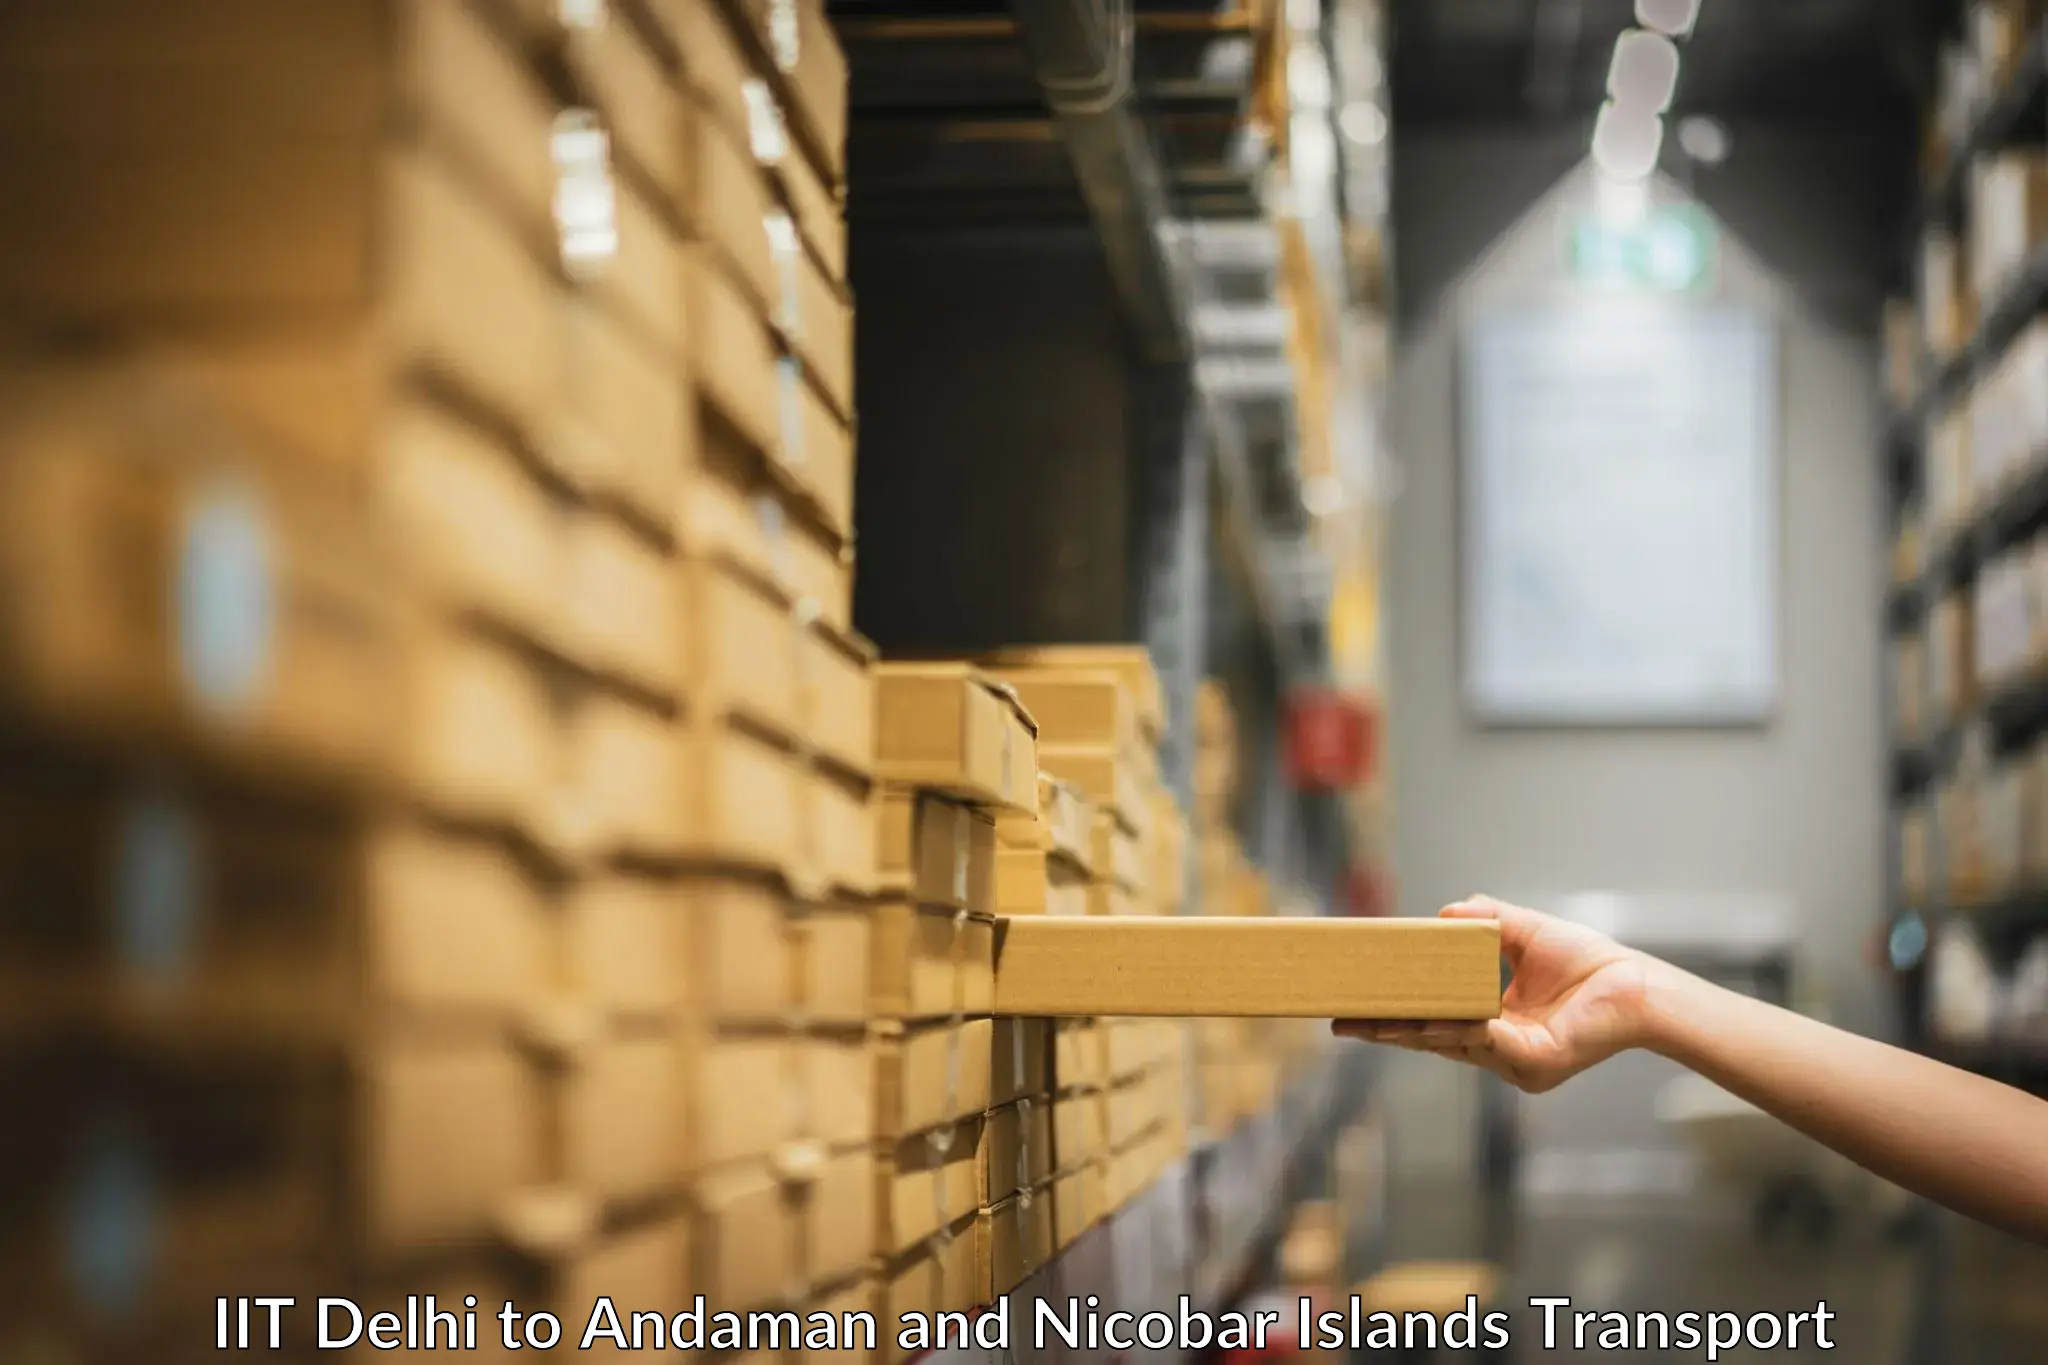 Goods delivery service IIT Delhi to Andaman and Nicobar Islands